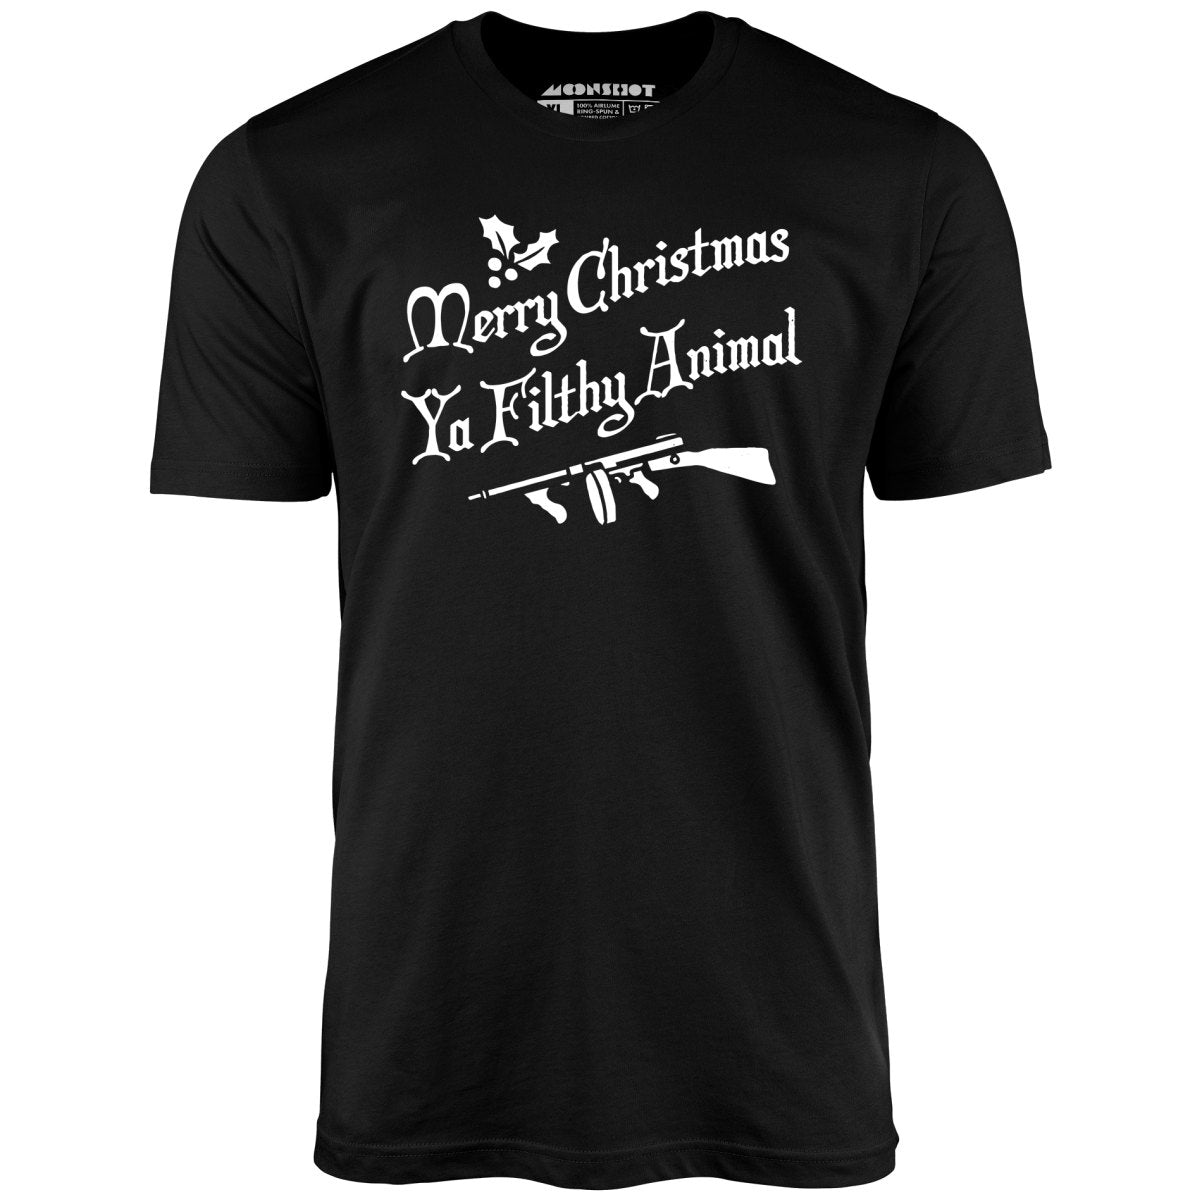 Merry Christmas Ya Filthy Animal - Unisex T-Shirt